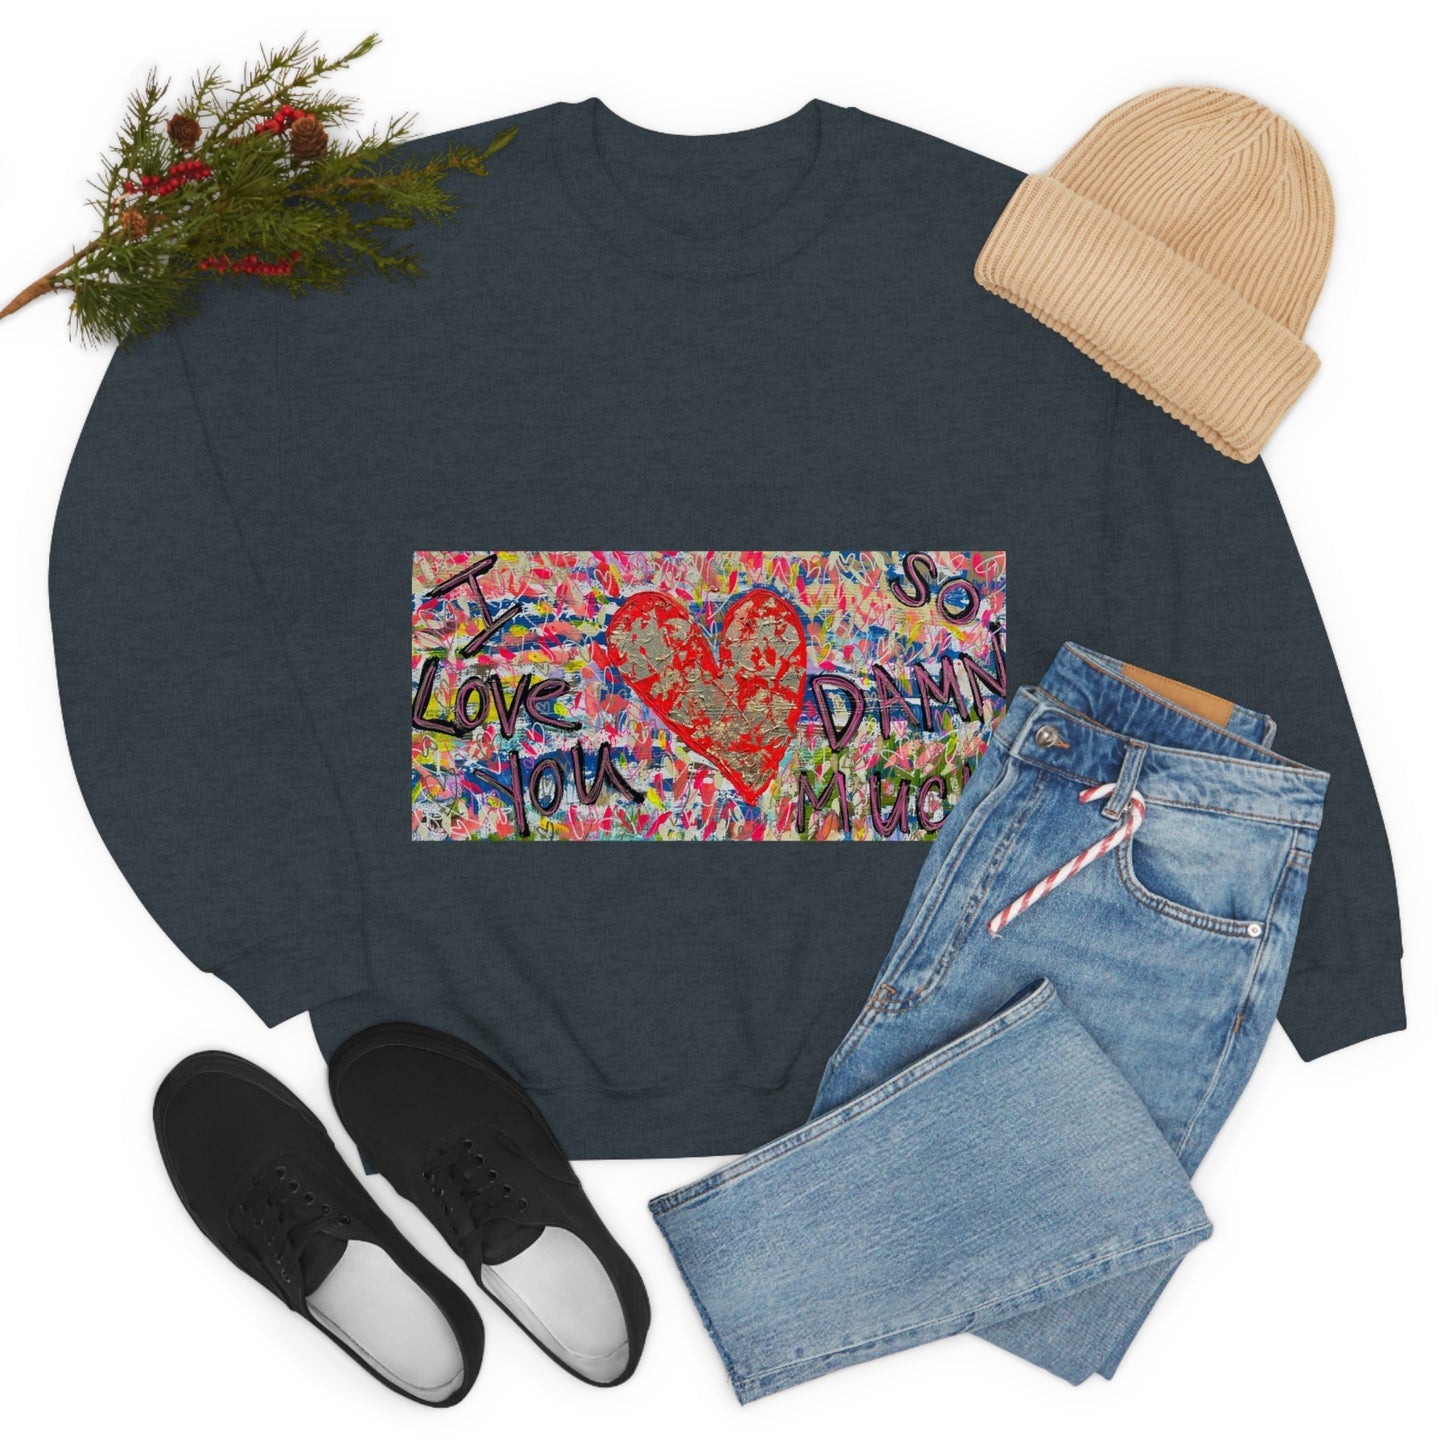 "I Love You So Damn Much" Unisex Heavy Blend Crewneck Sweatshirt